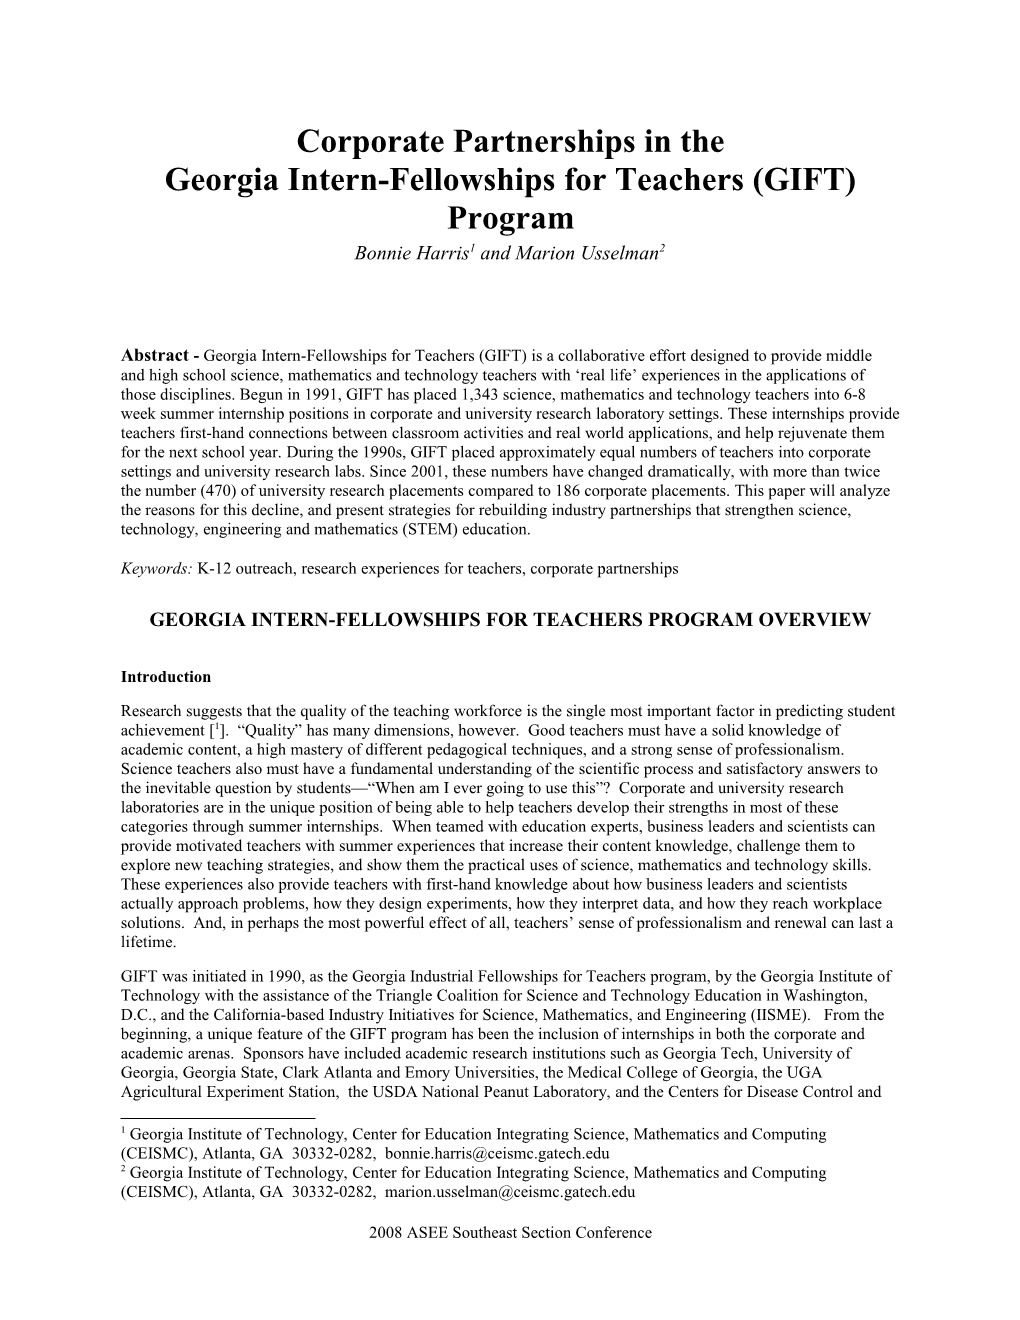 Georgia High School Teachers in Academic Laboratories